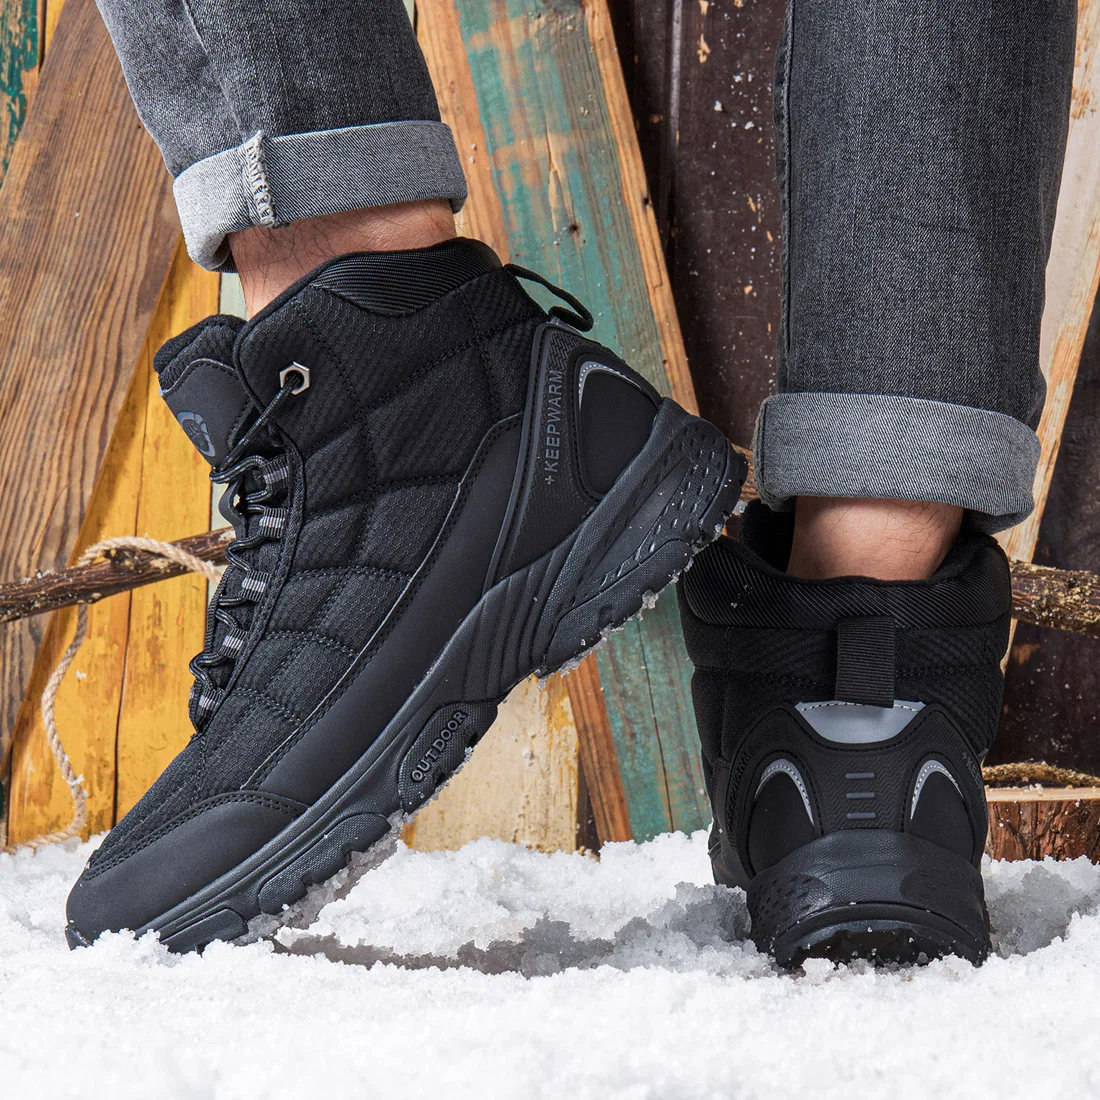 Baasploa-zapatos de invierno para hombre, calzado de senderismo, impermeable, antideslizante, zapatillas de seguridad para acampar, botas casuales, zapatos cálidos para caminar